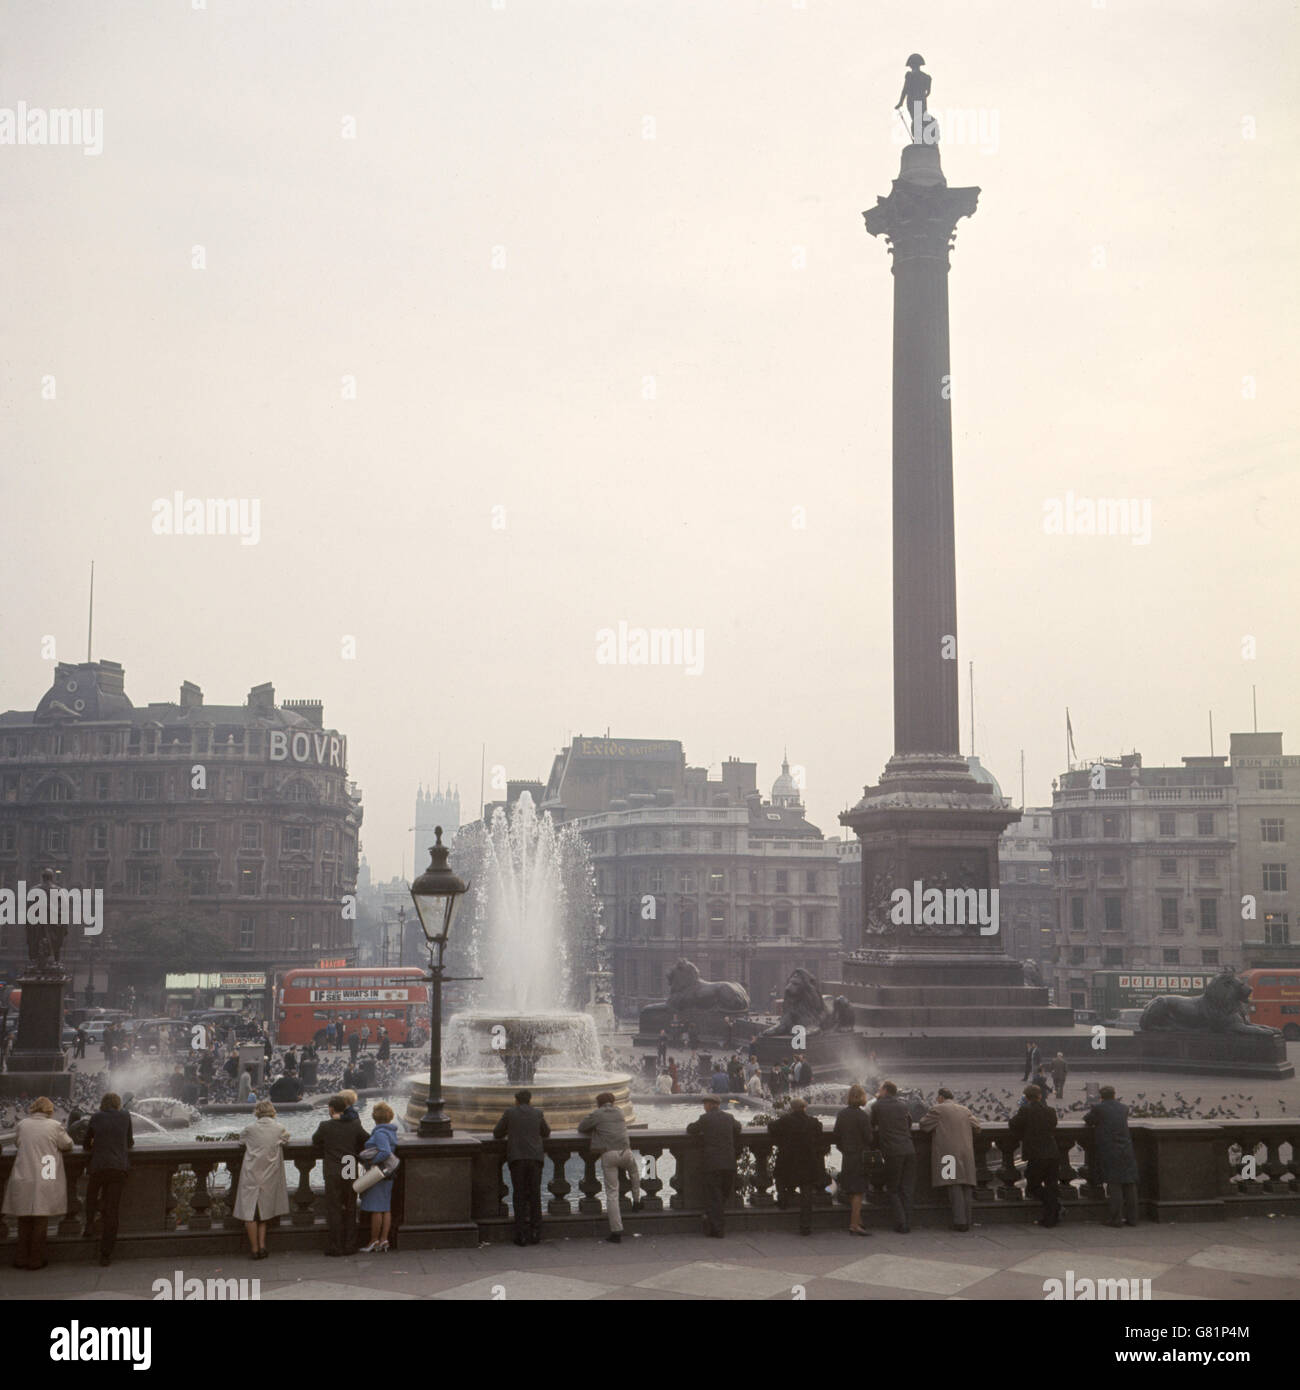 London Scenes - Trafalgar Square. Nelson's Column, Trafalgar Square. Stock Photo